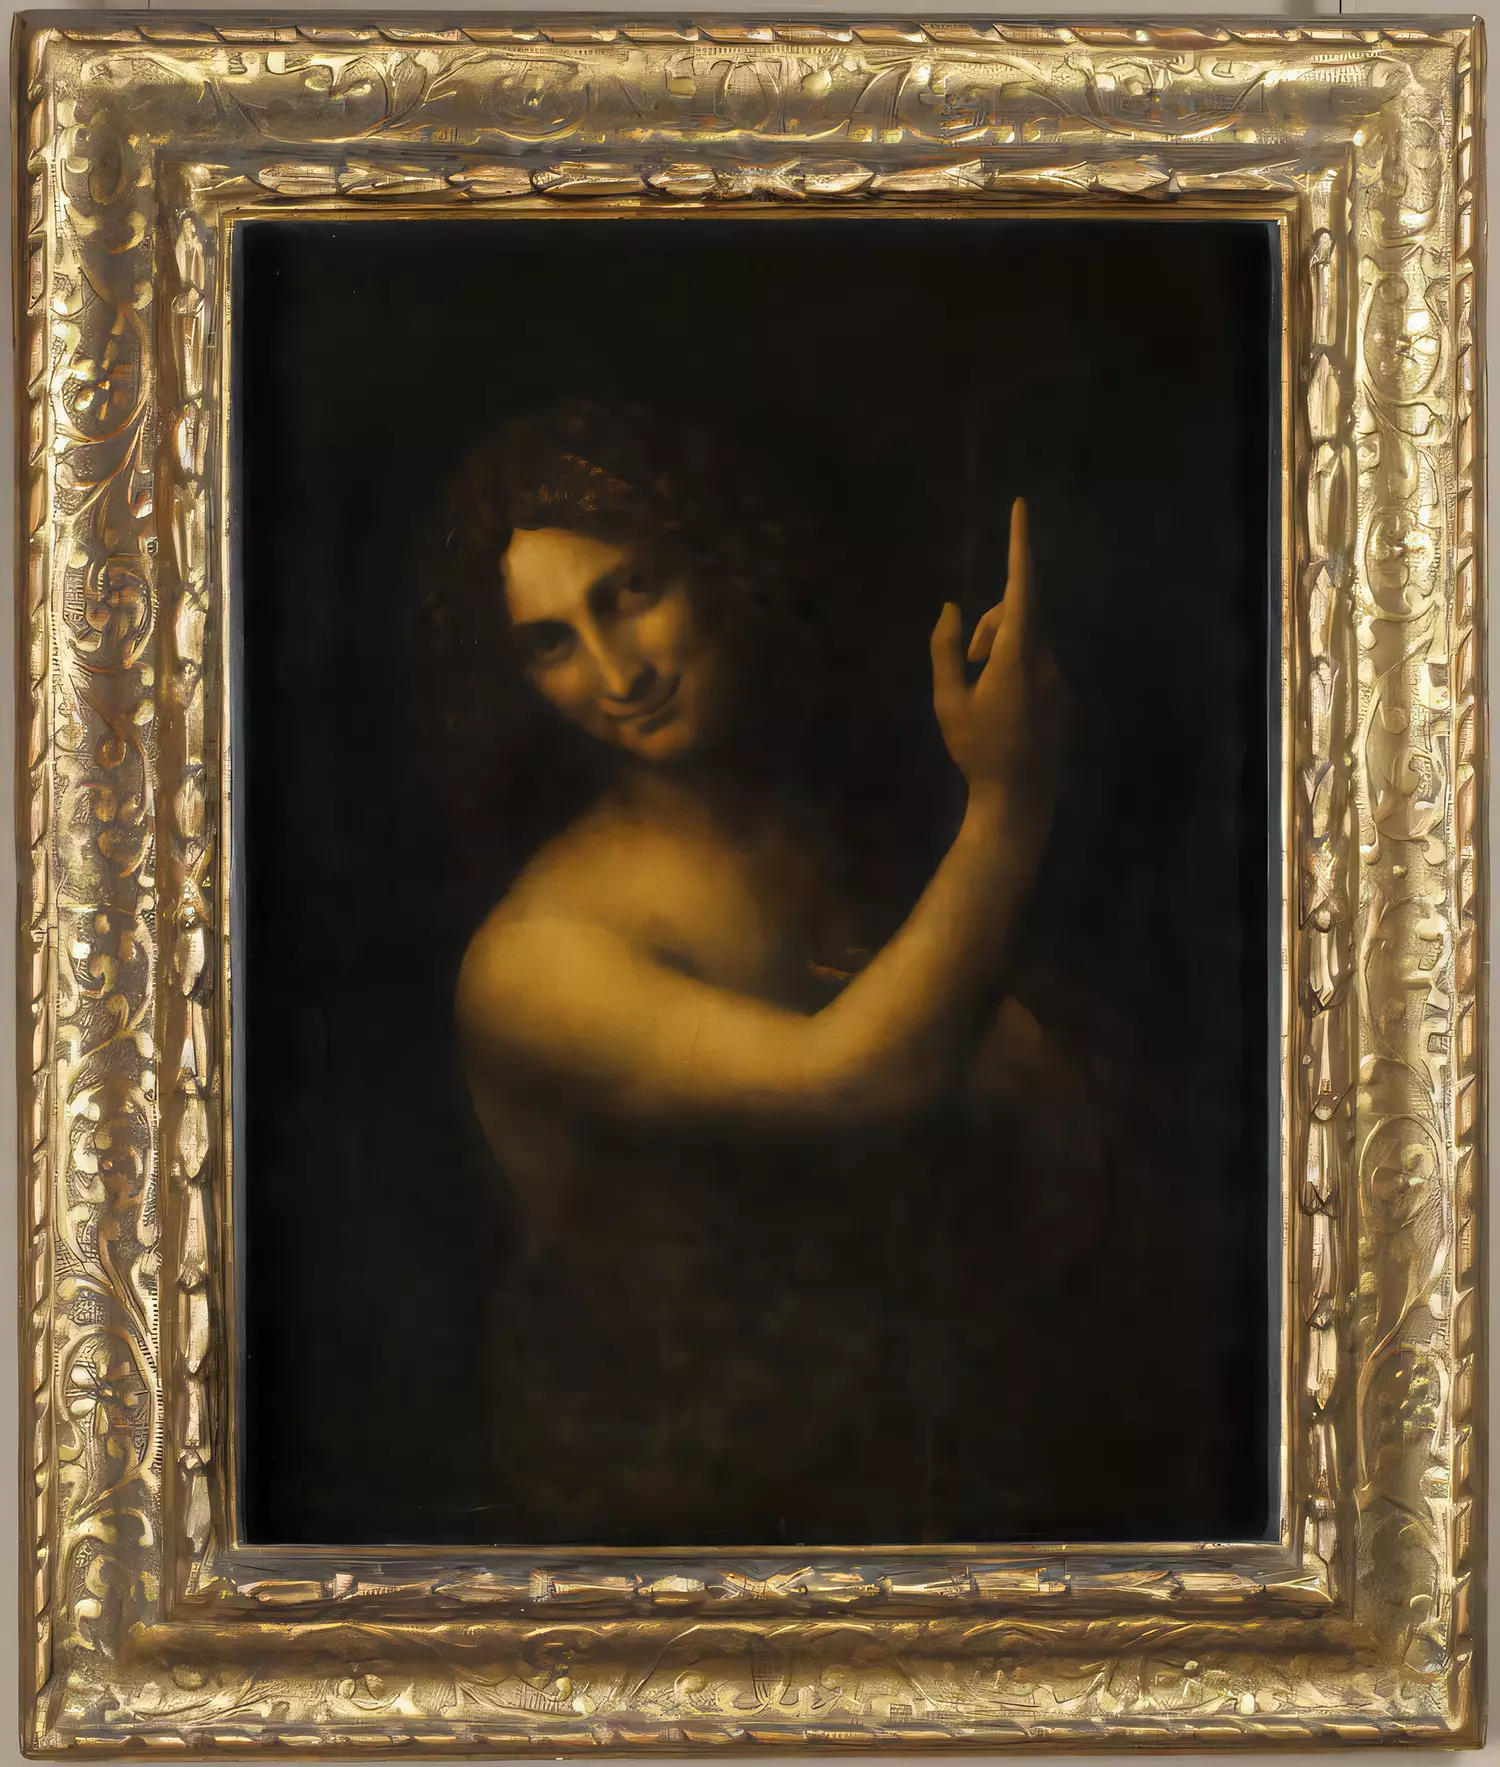 One Day, One Artwork – "Saint John the Baptist" by Leonardo da Vinci